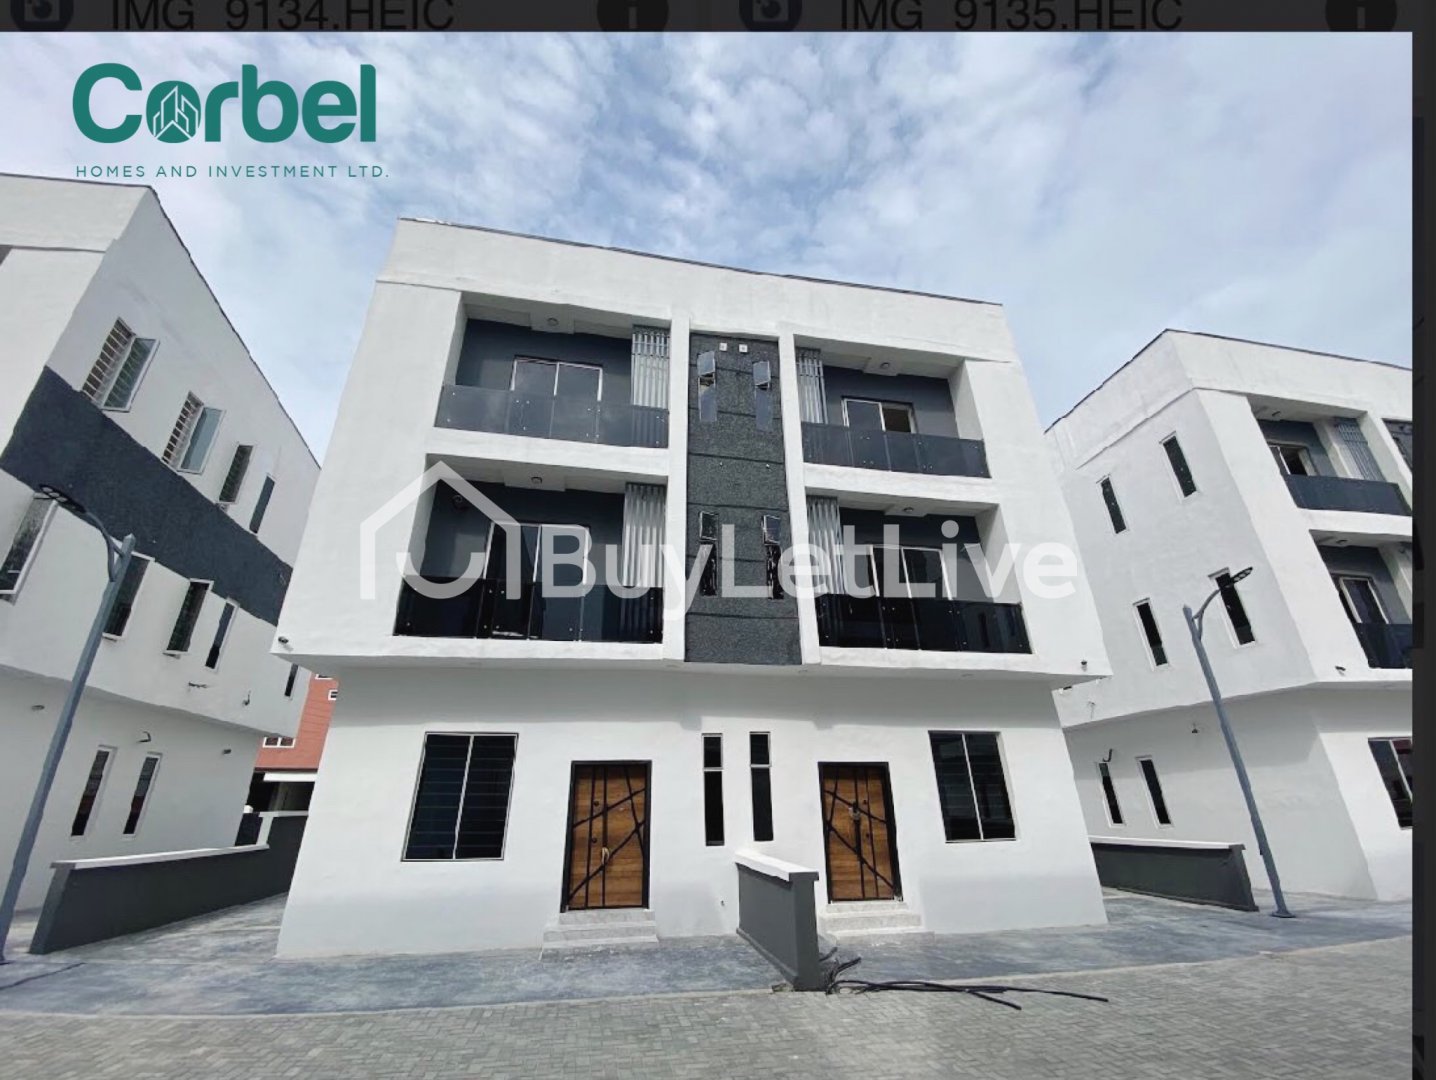 4 bedrooms Semi Detached Duplex for sale at Agungi